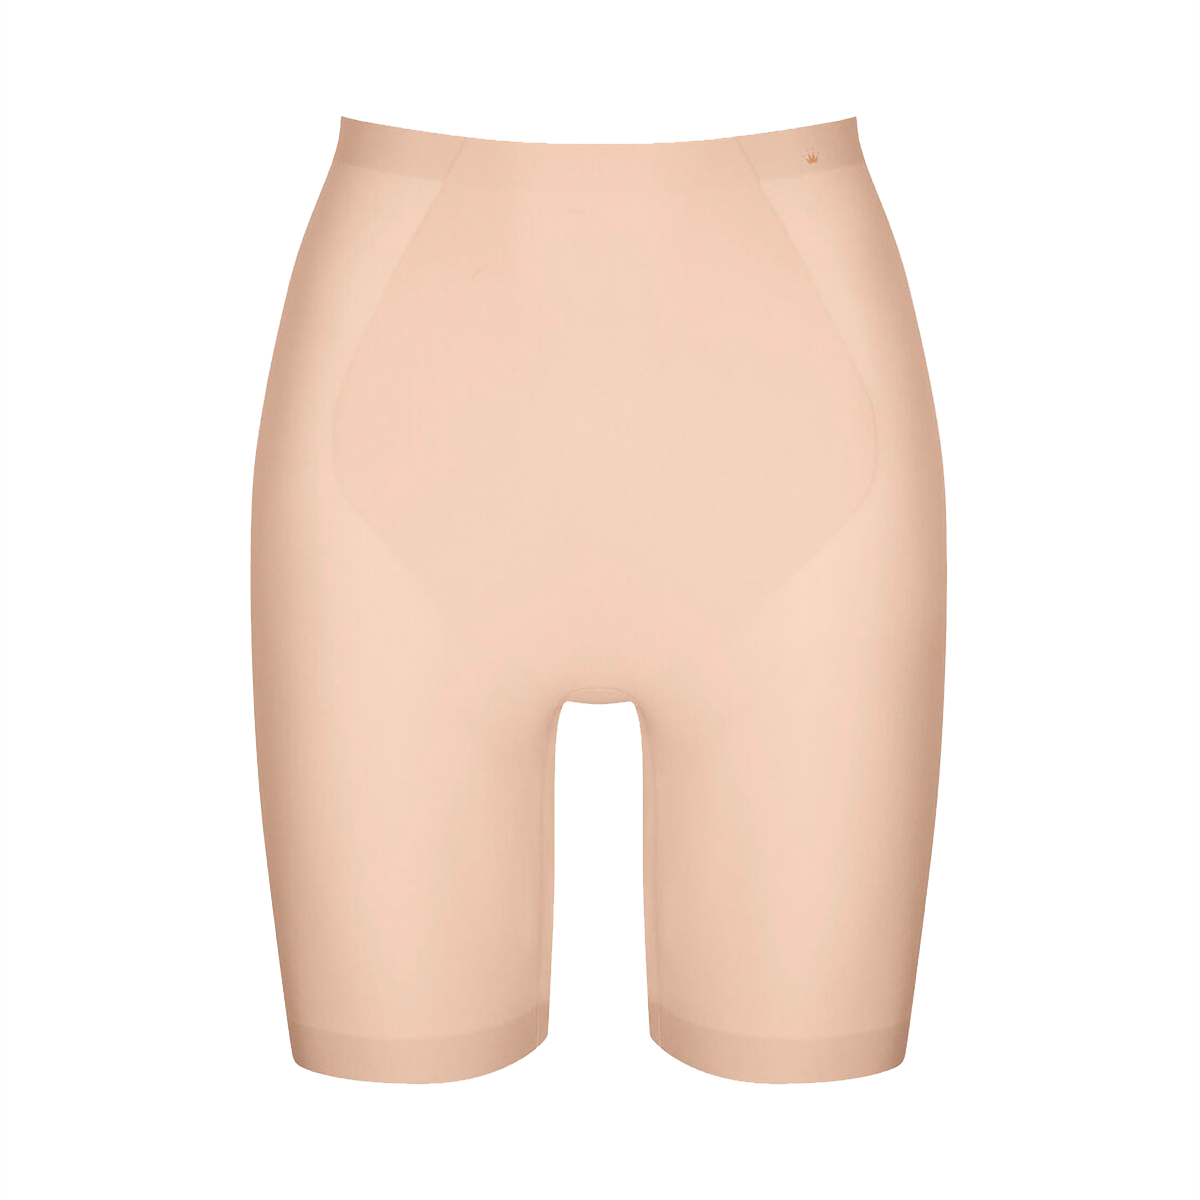 6: Triumph Medium Shaping Series Shorts, Farve: Beige, Størrelse: XL, Dame